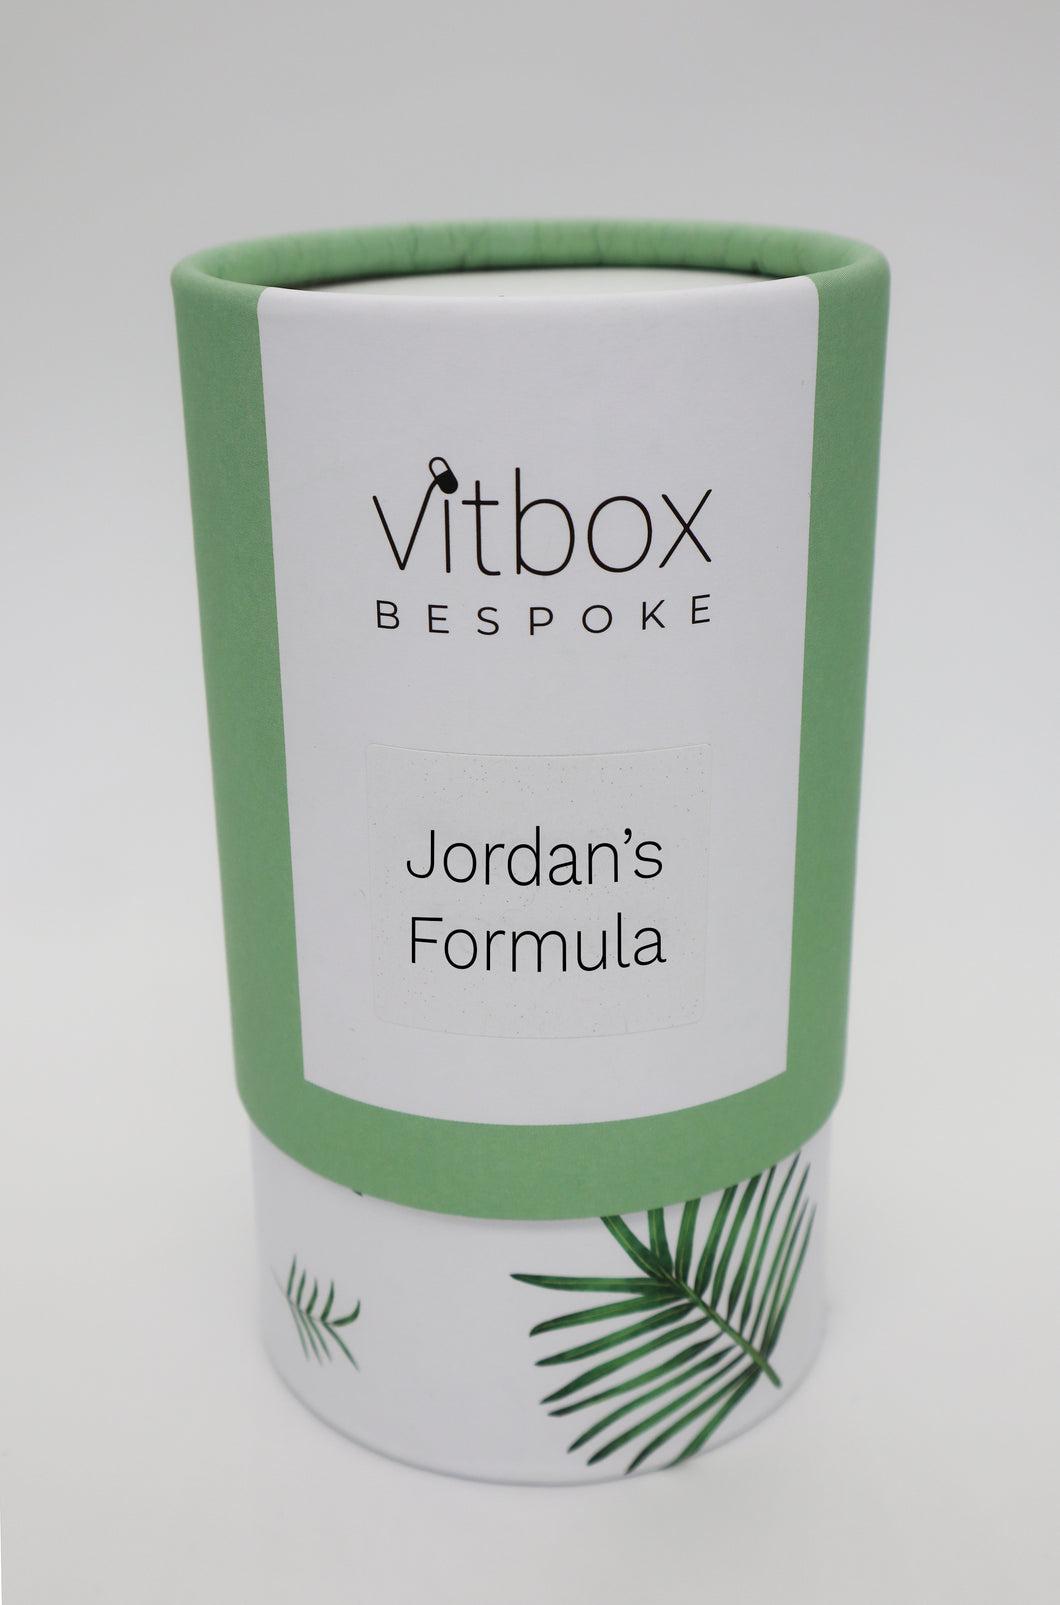 Jordan's Vitbox Bespoke